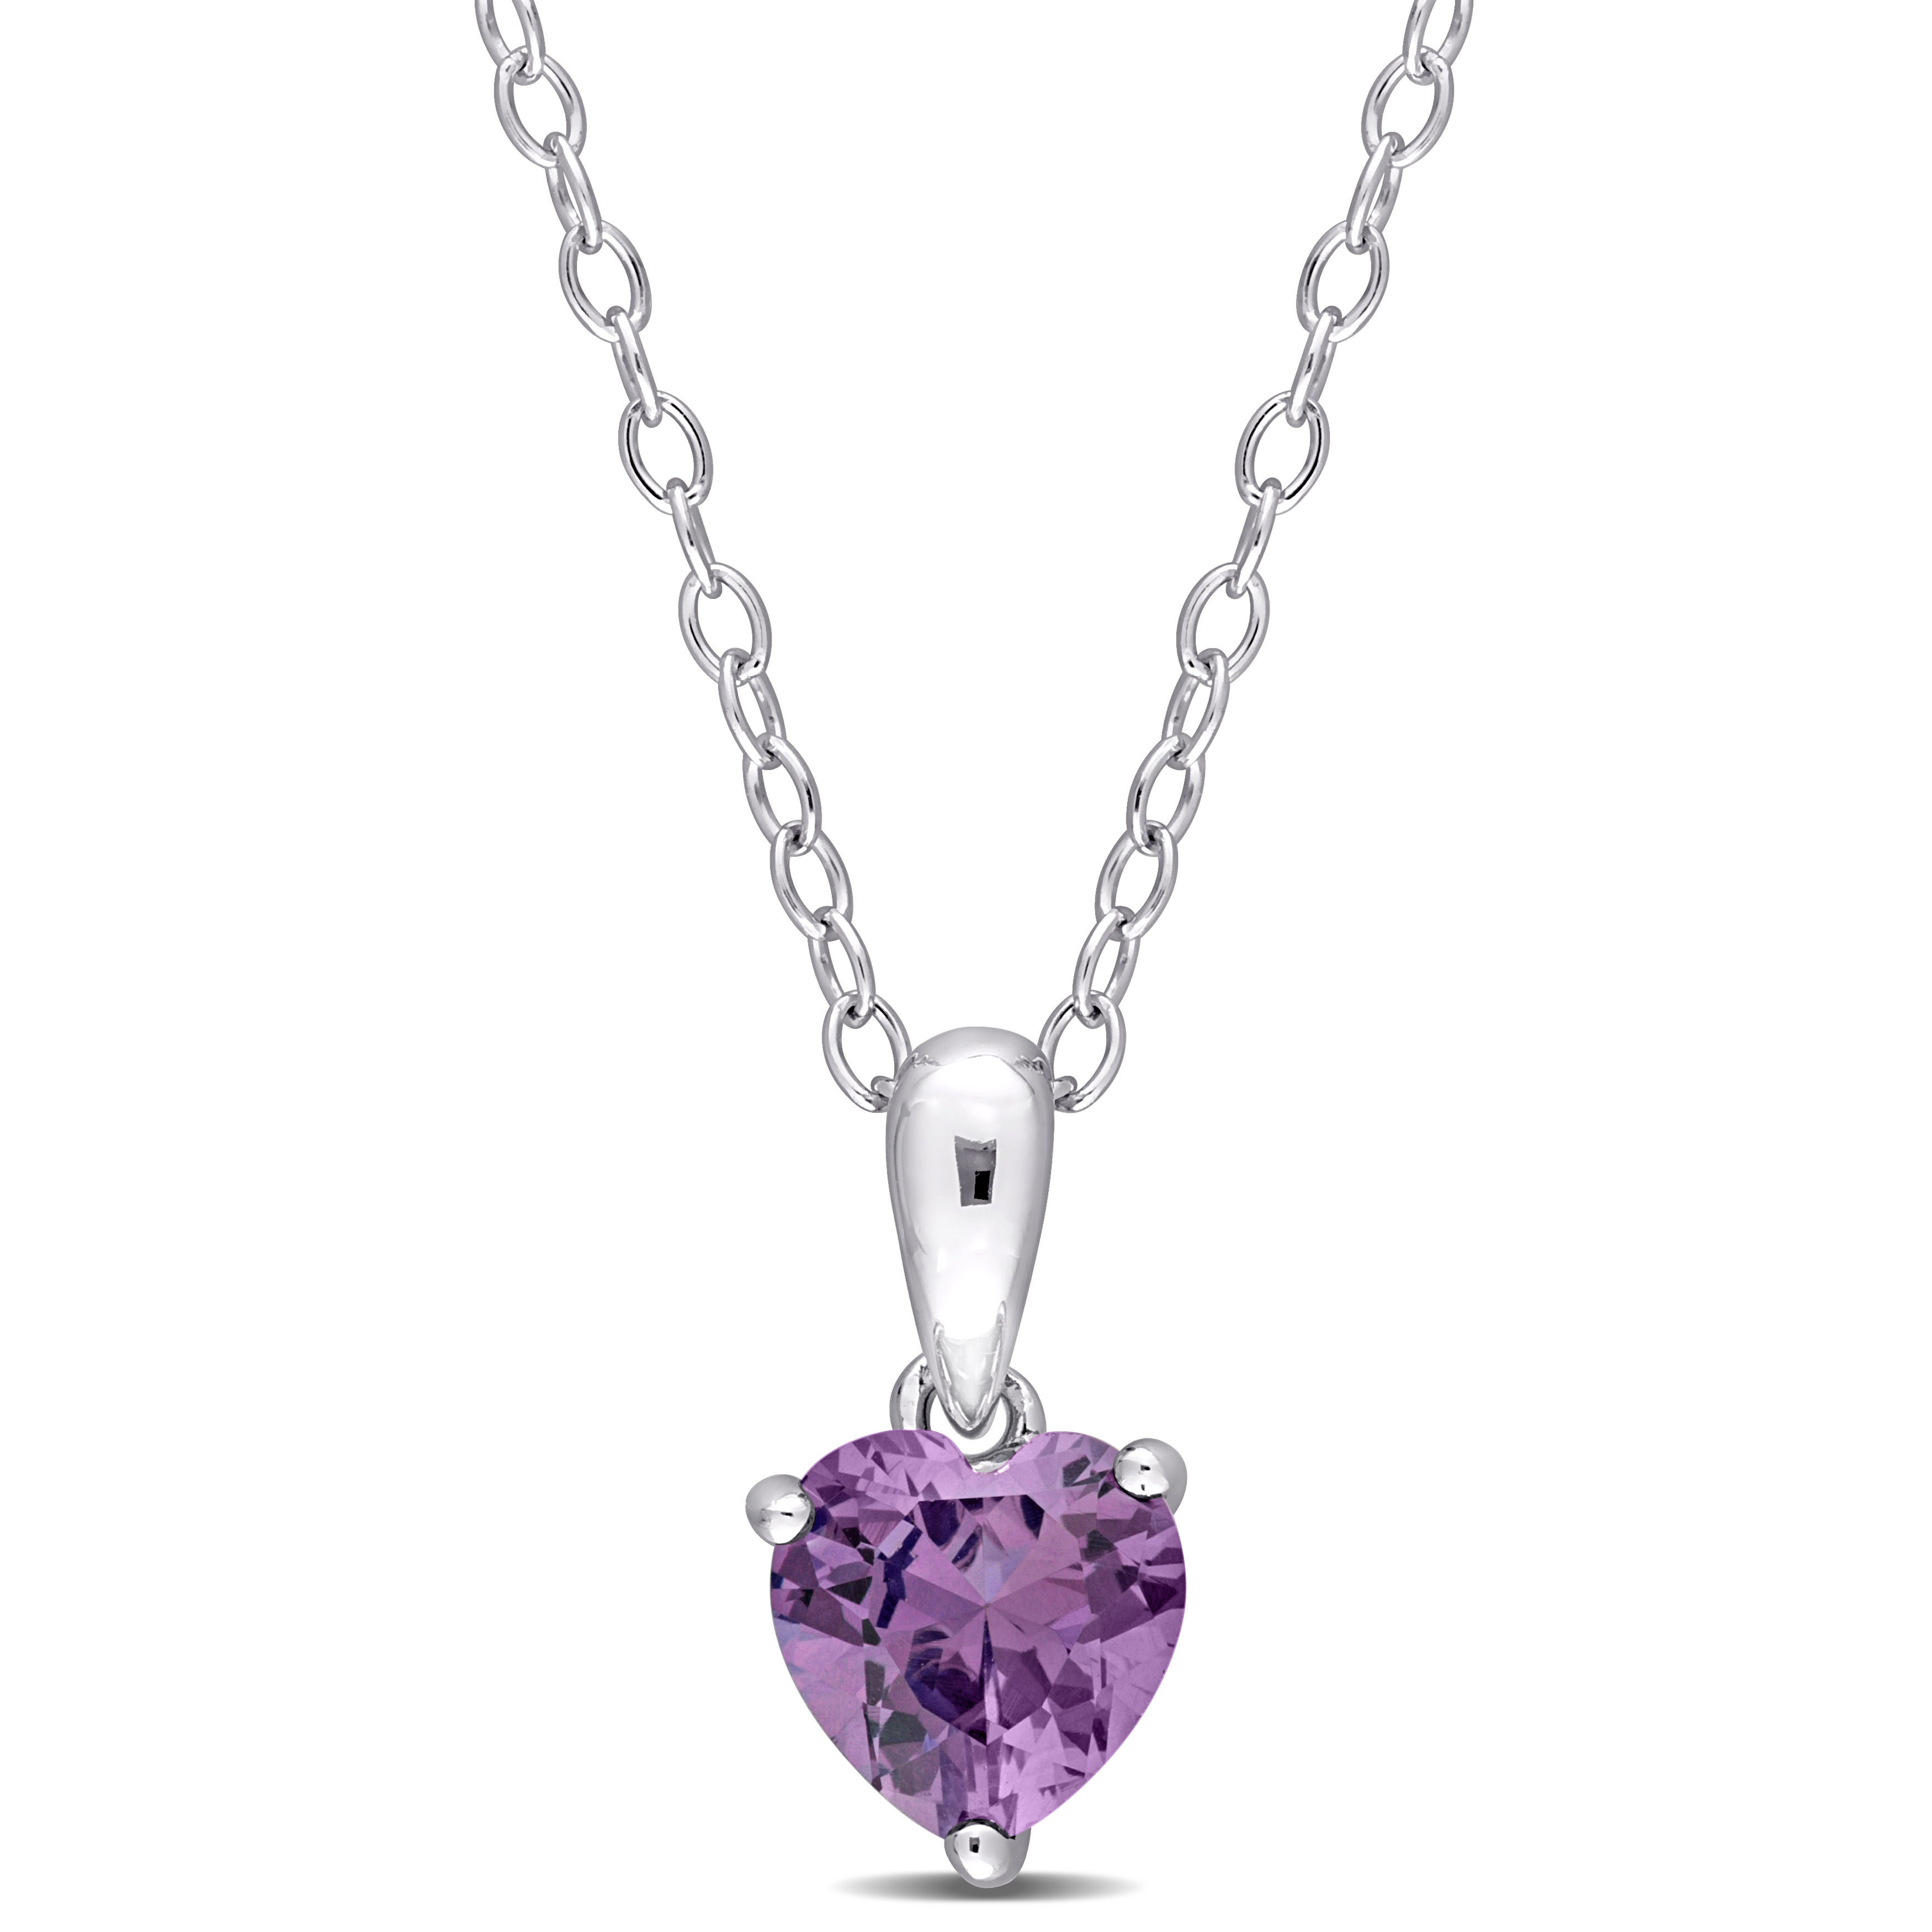 Buy Gemstone Pendants Online NY | Birthstone Diamond Pendant Women